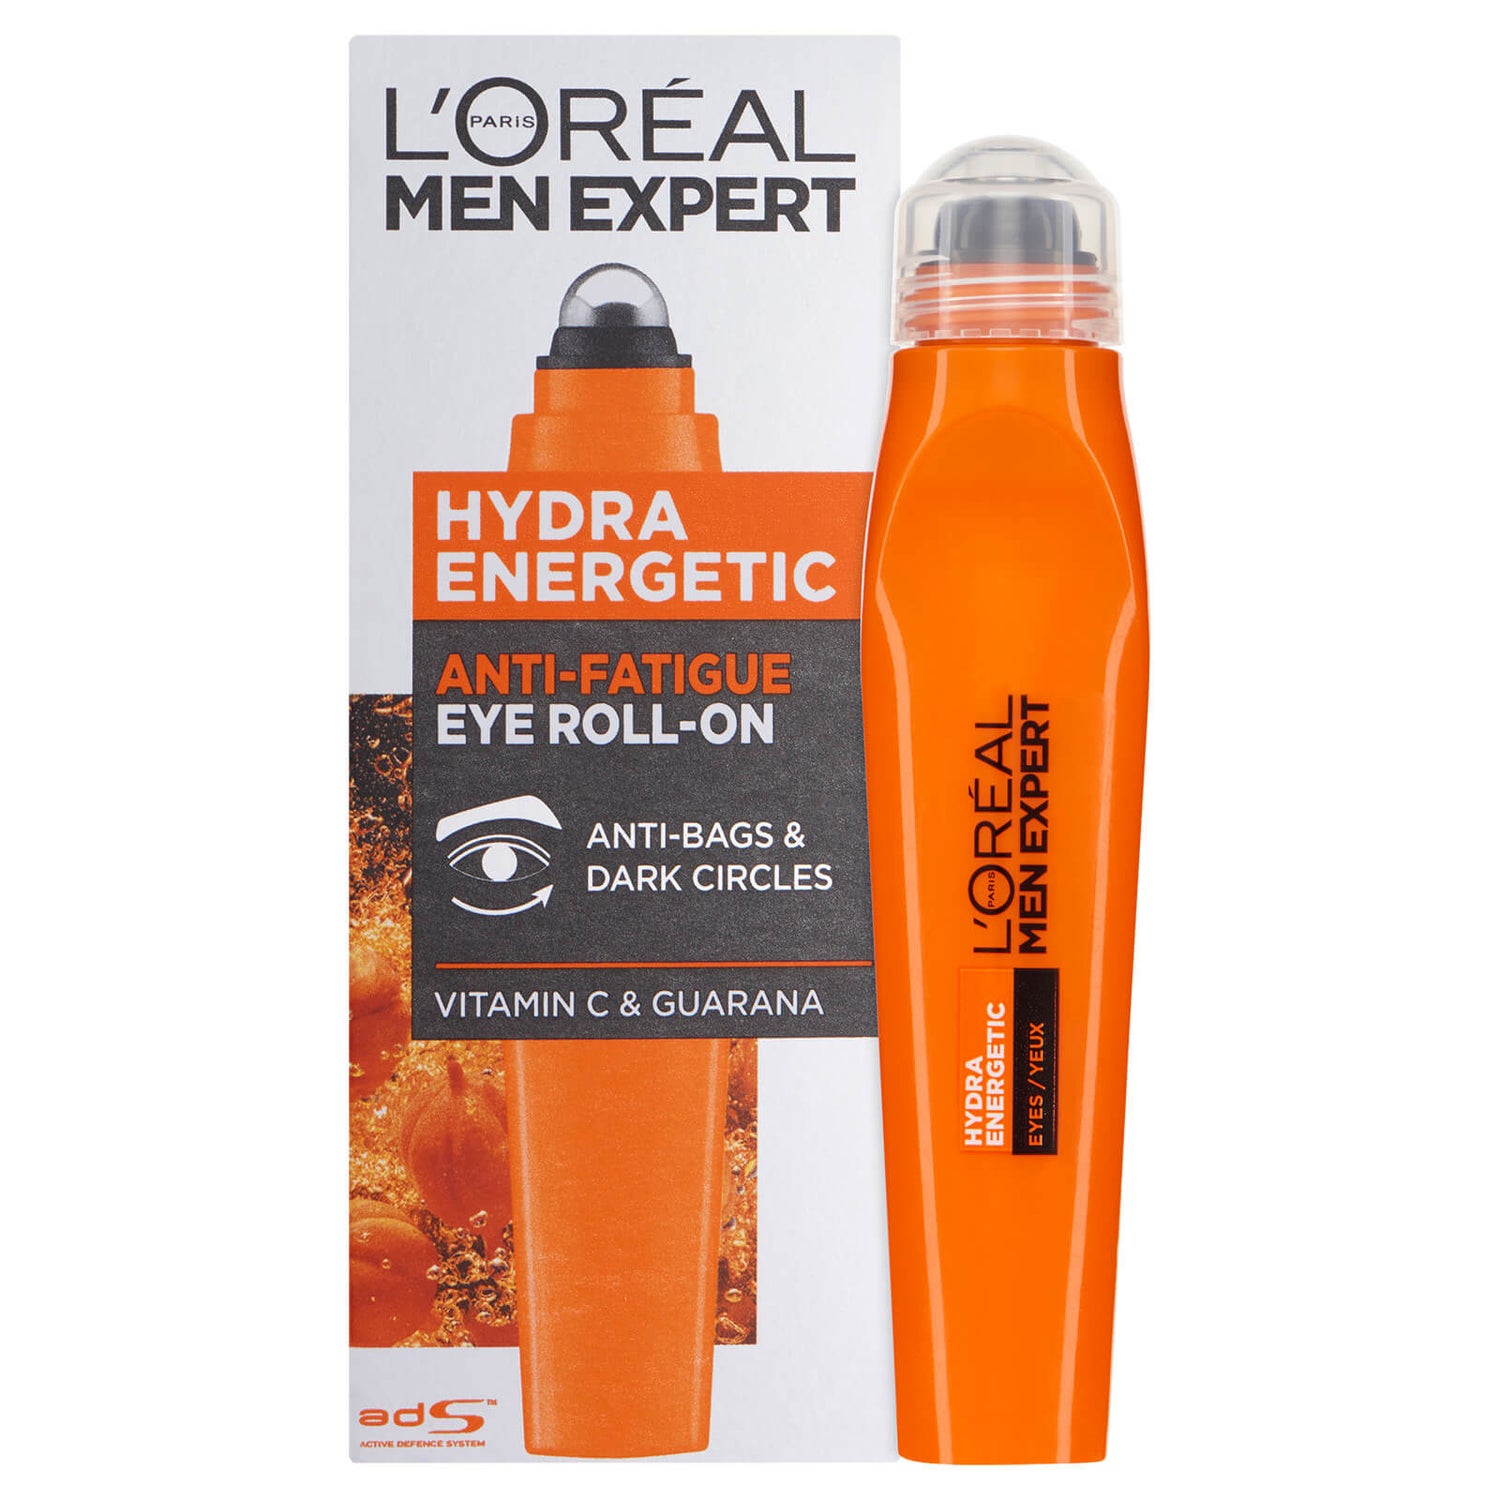 L'Oreal Paris Men Expert Hydra Energetic Eye Roll-On (.3oz)